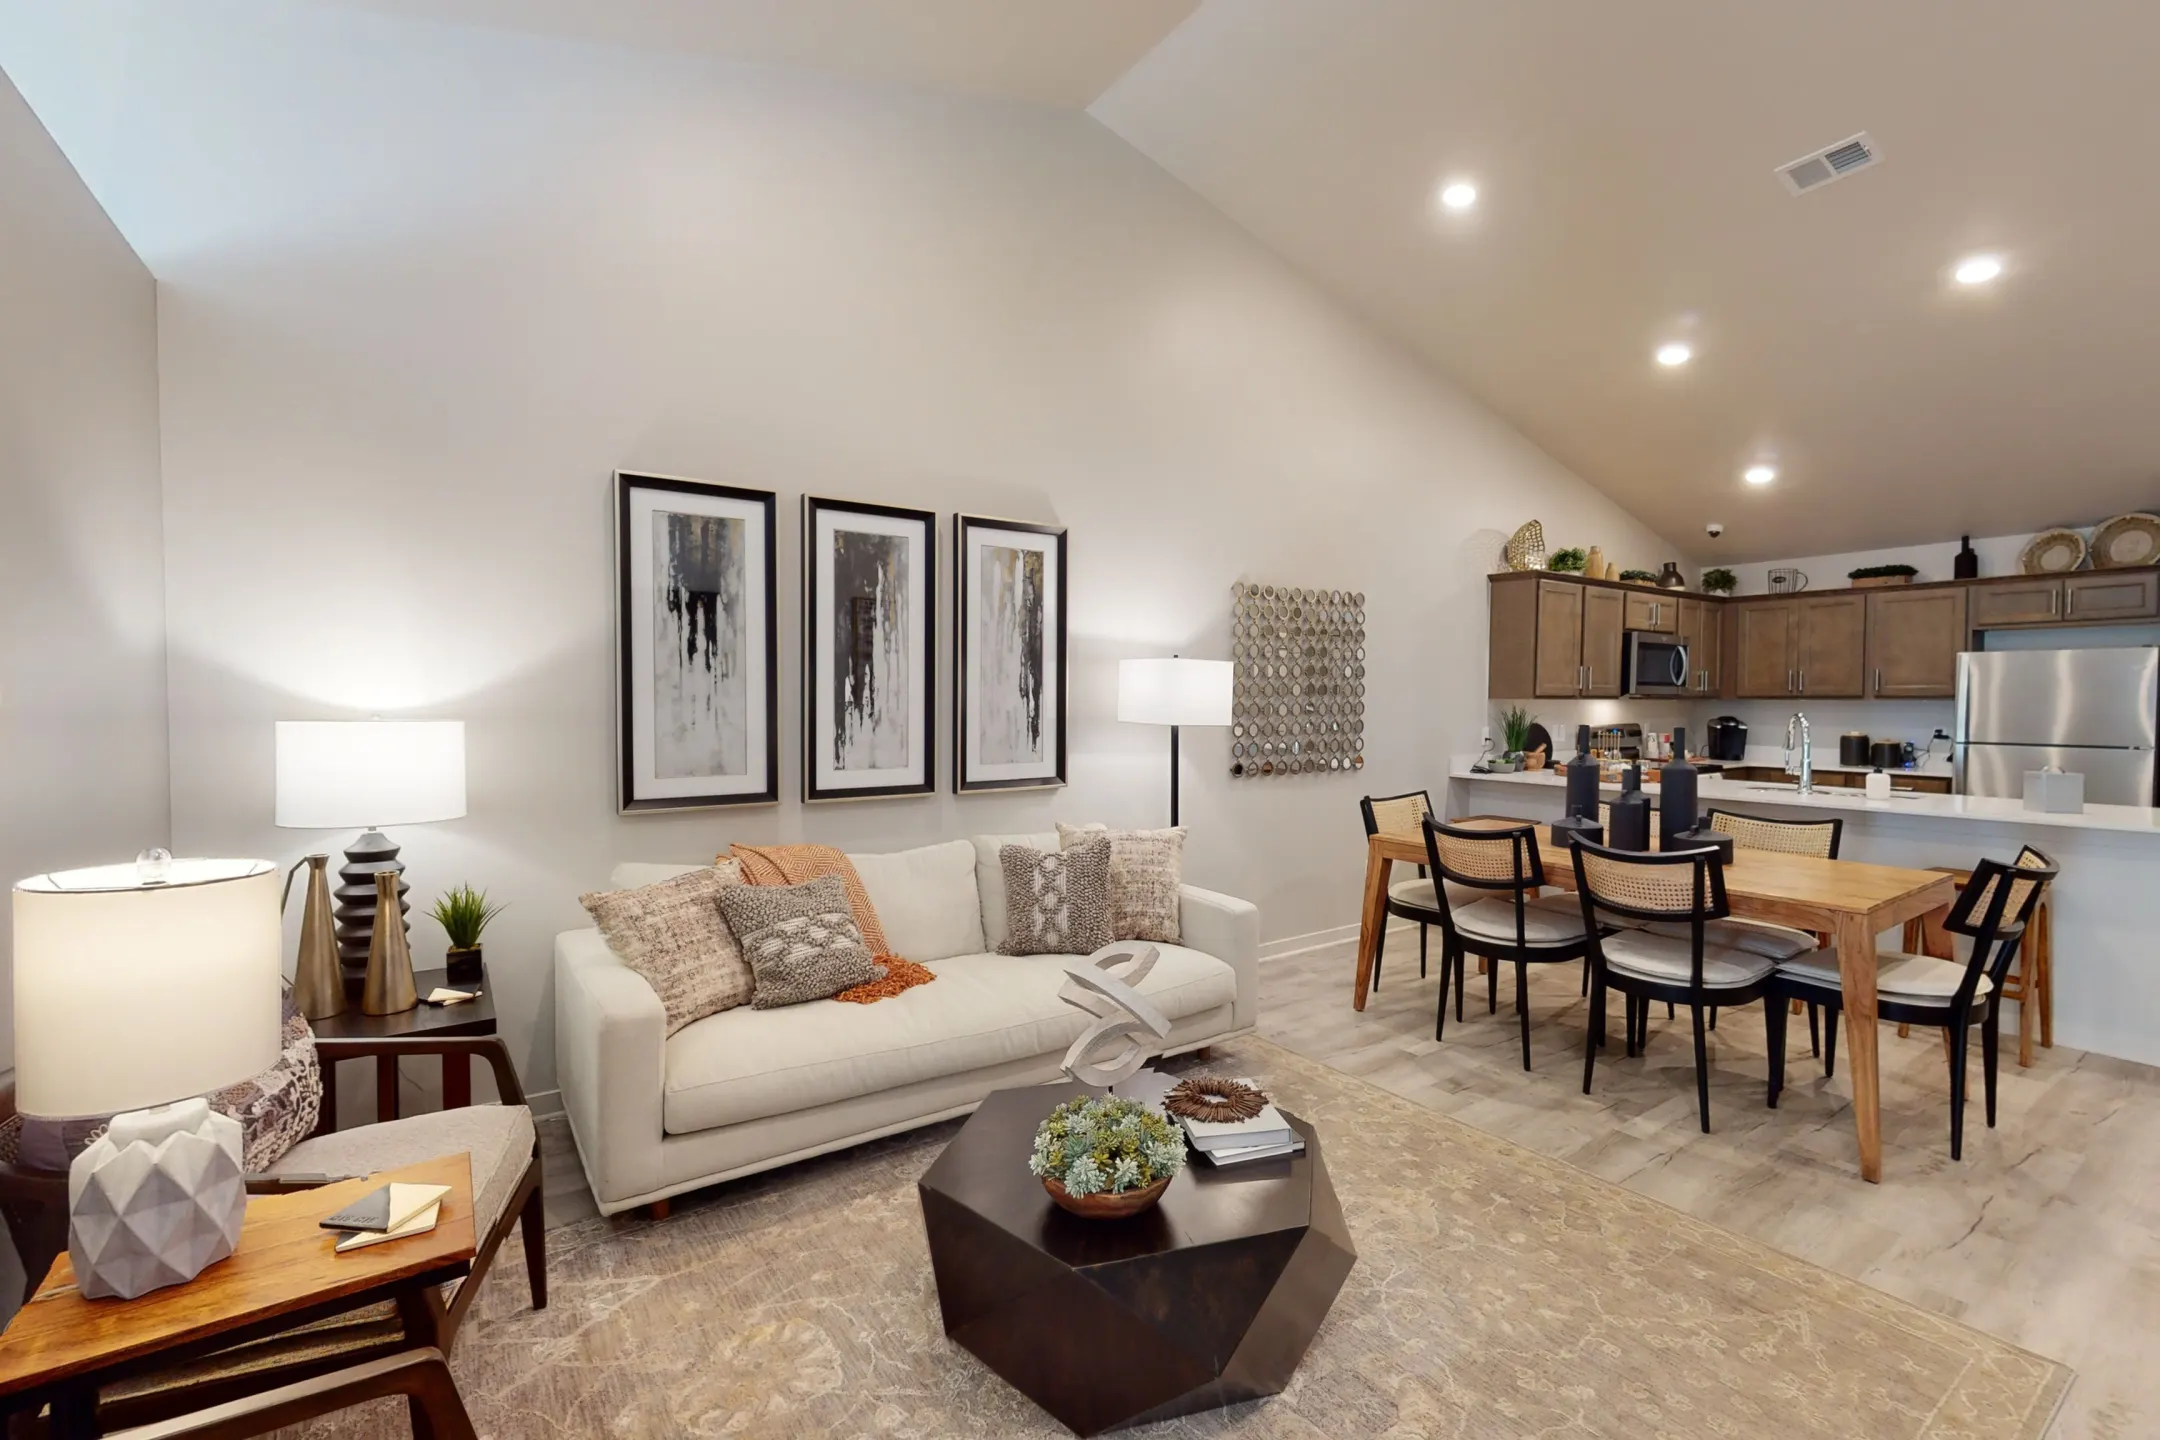 Living Room - Insignia Apartments - Clarkston, MI